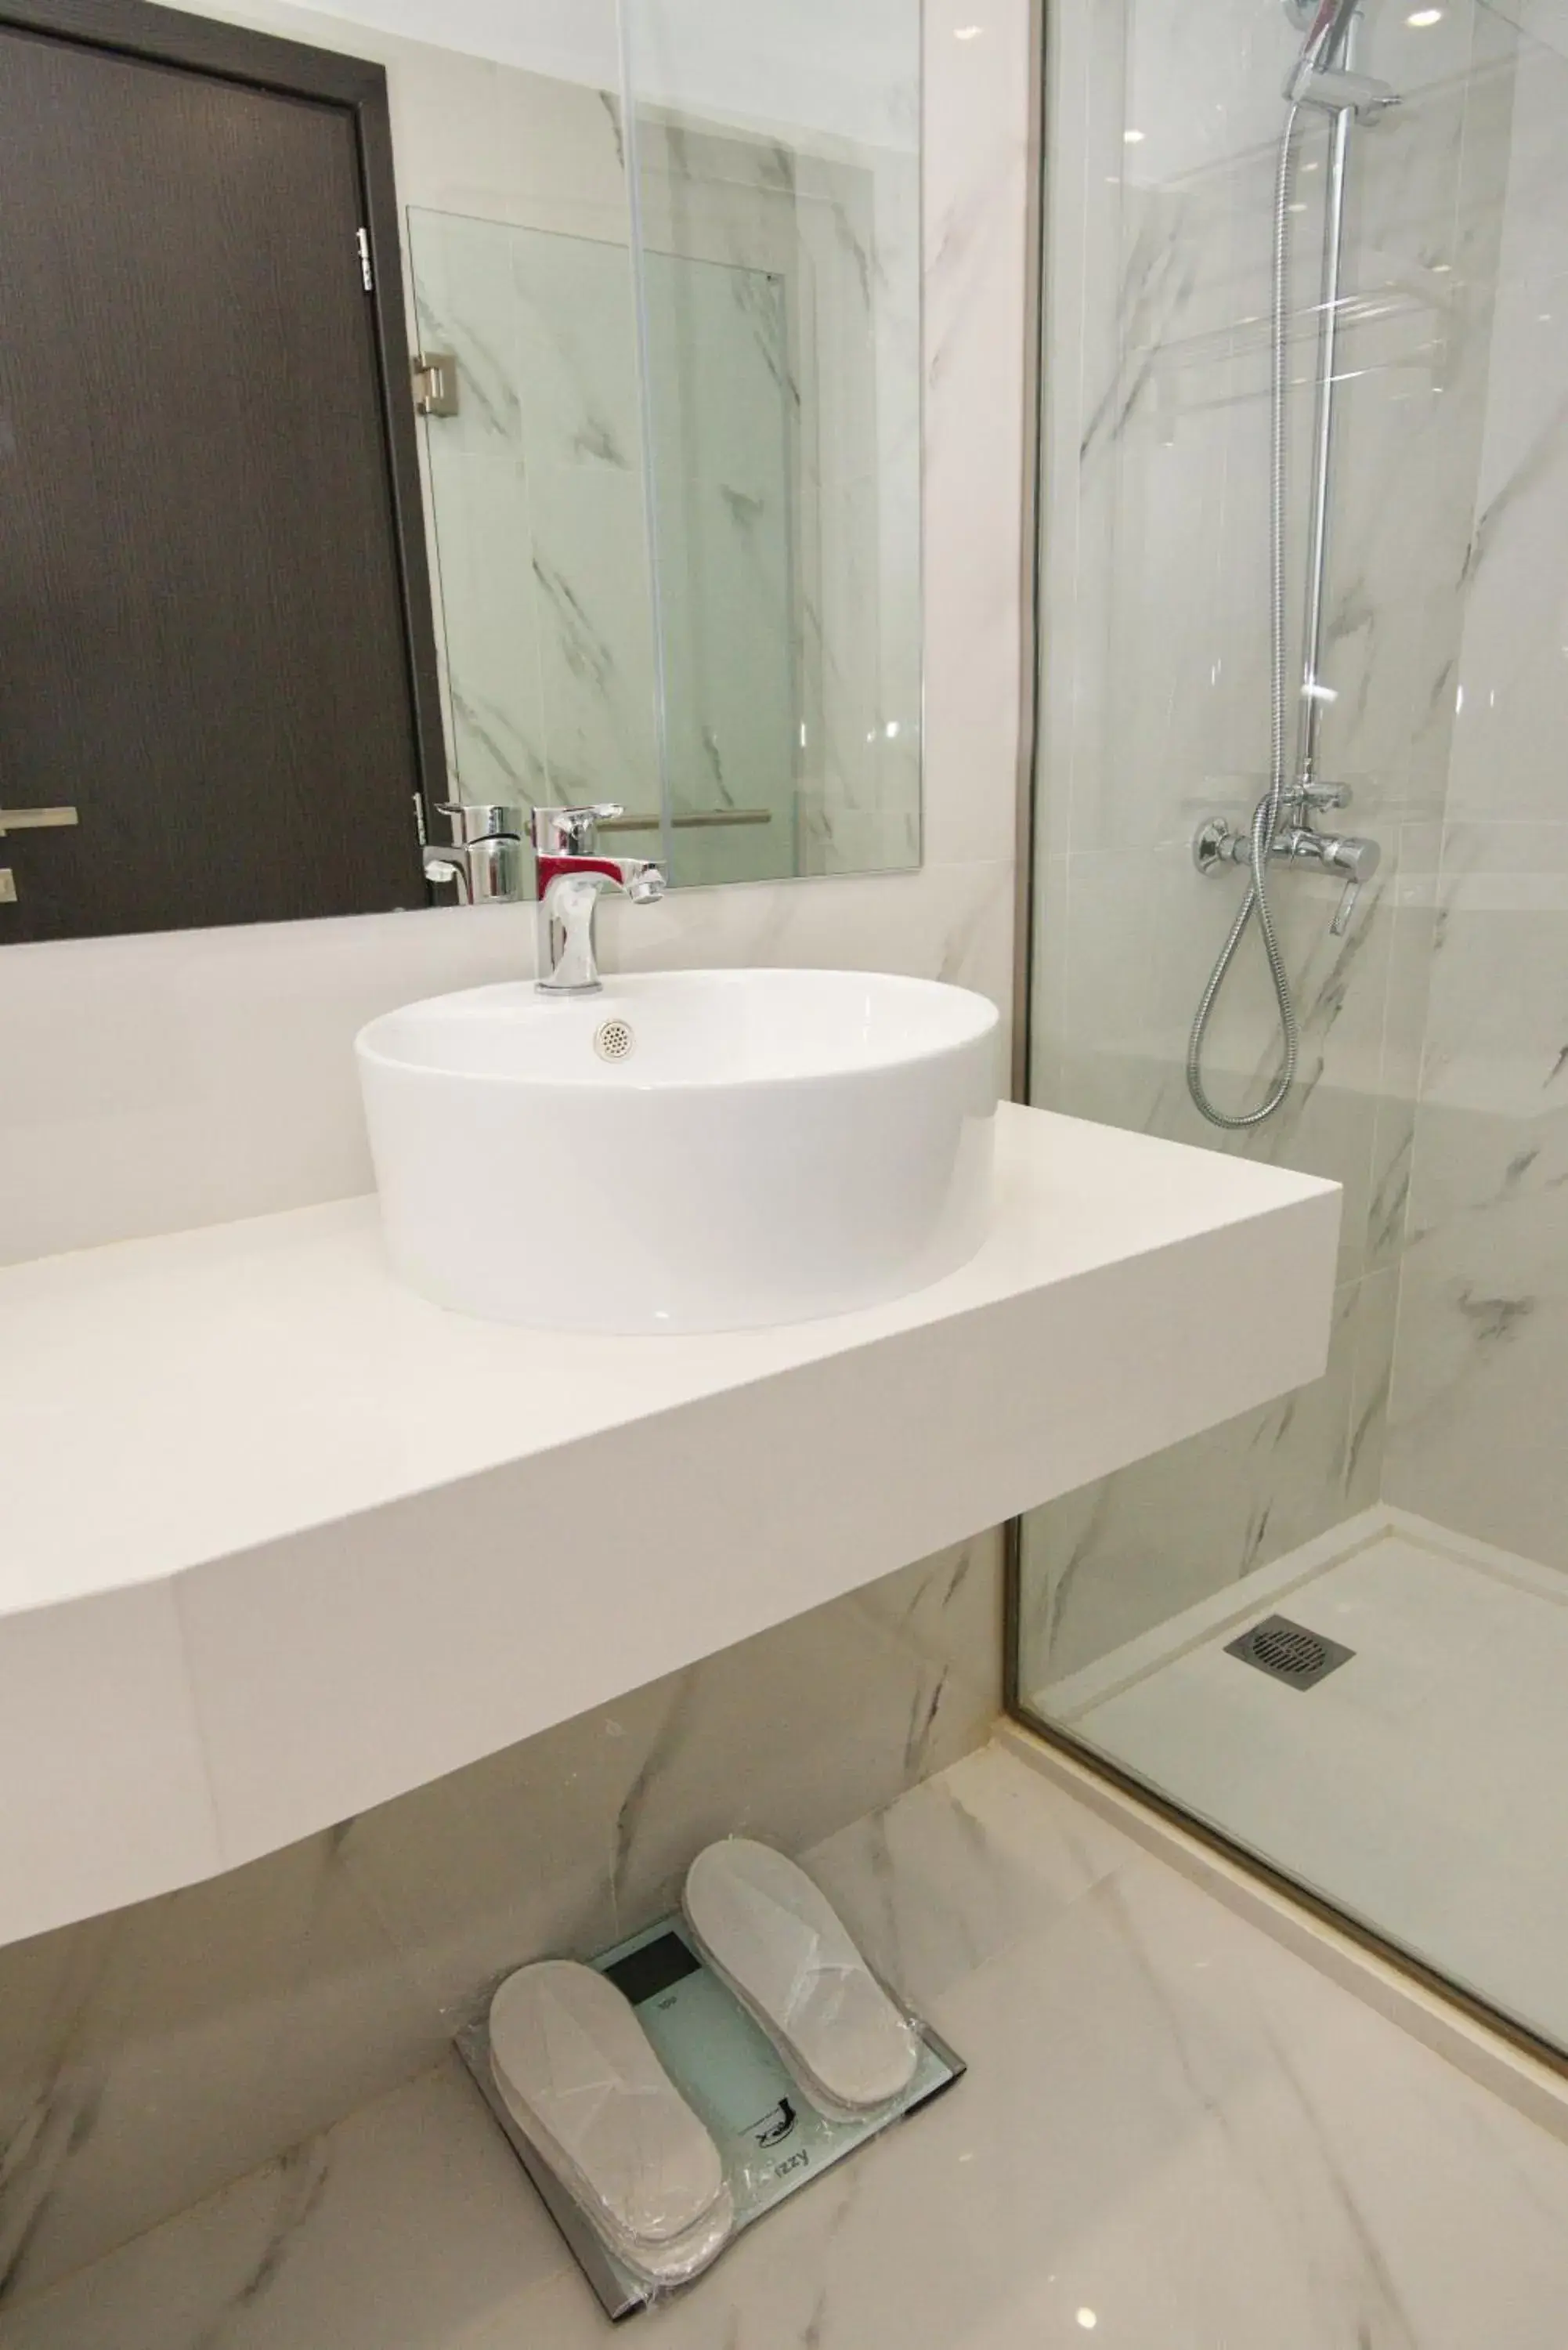 Bathroom in International Atene hotel